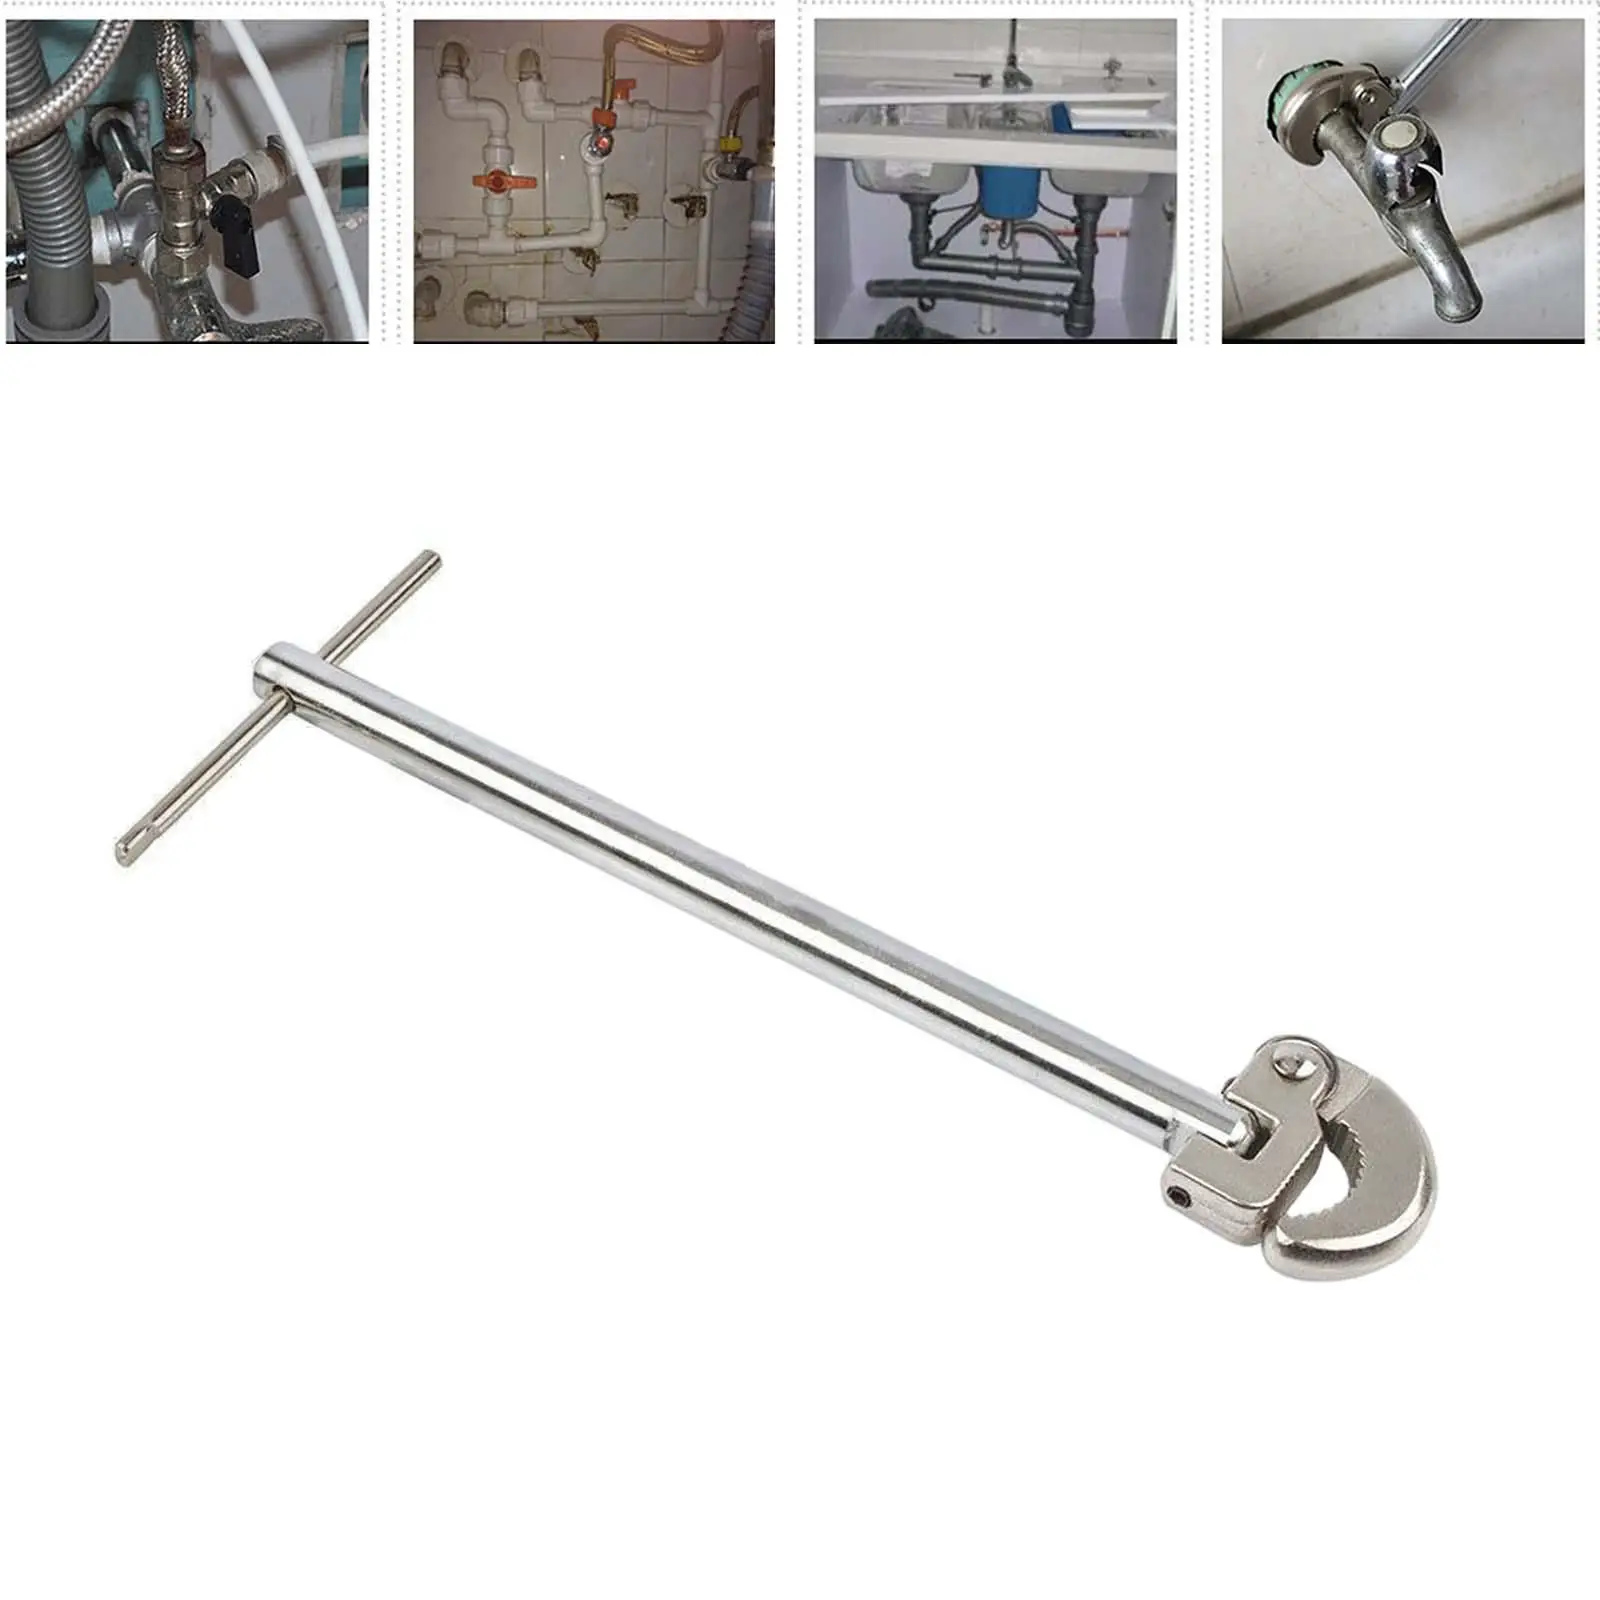 12Inch Adjustable Basin Wrench Plumbing Tool Tap Sink Spanner Plumbers